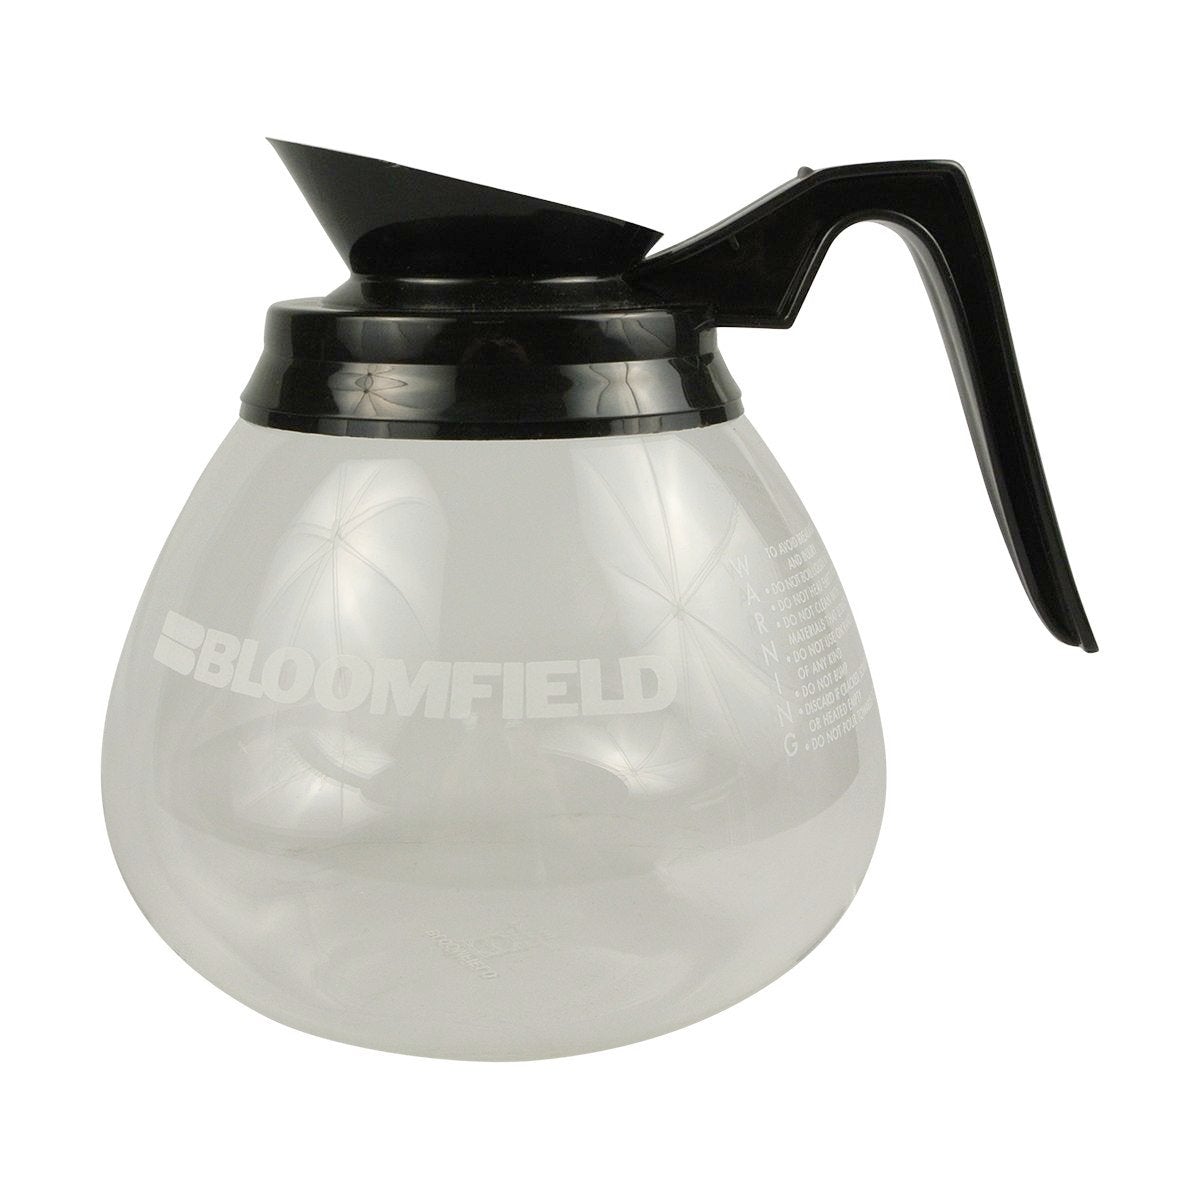 Bloomfield Black Handle Glass Coffee Pot